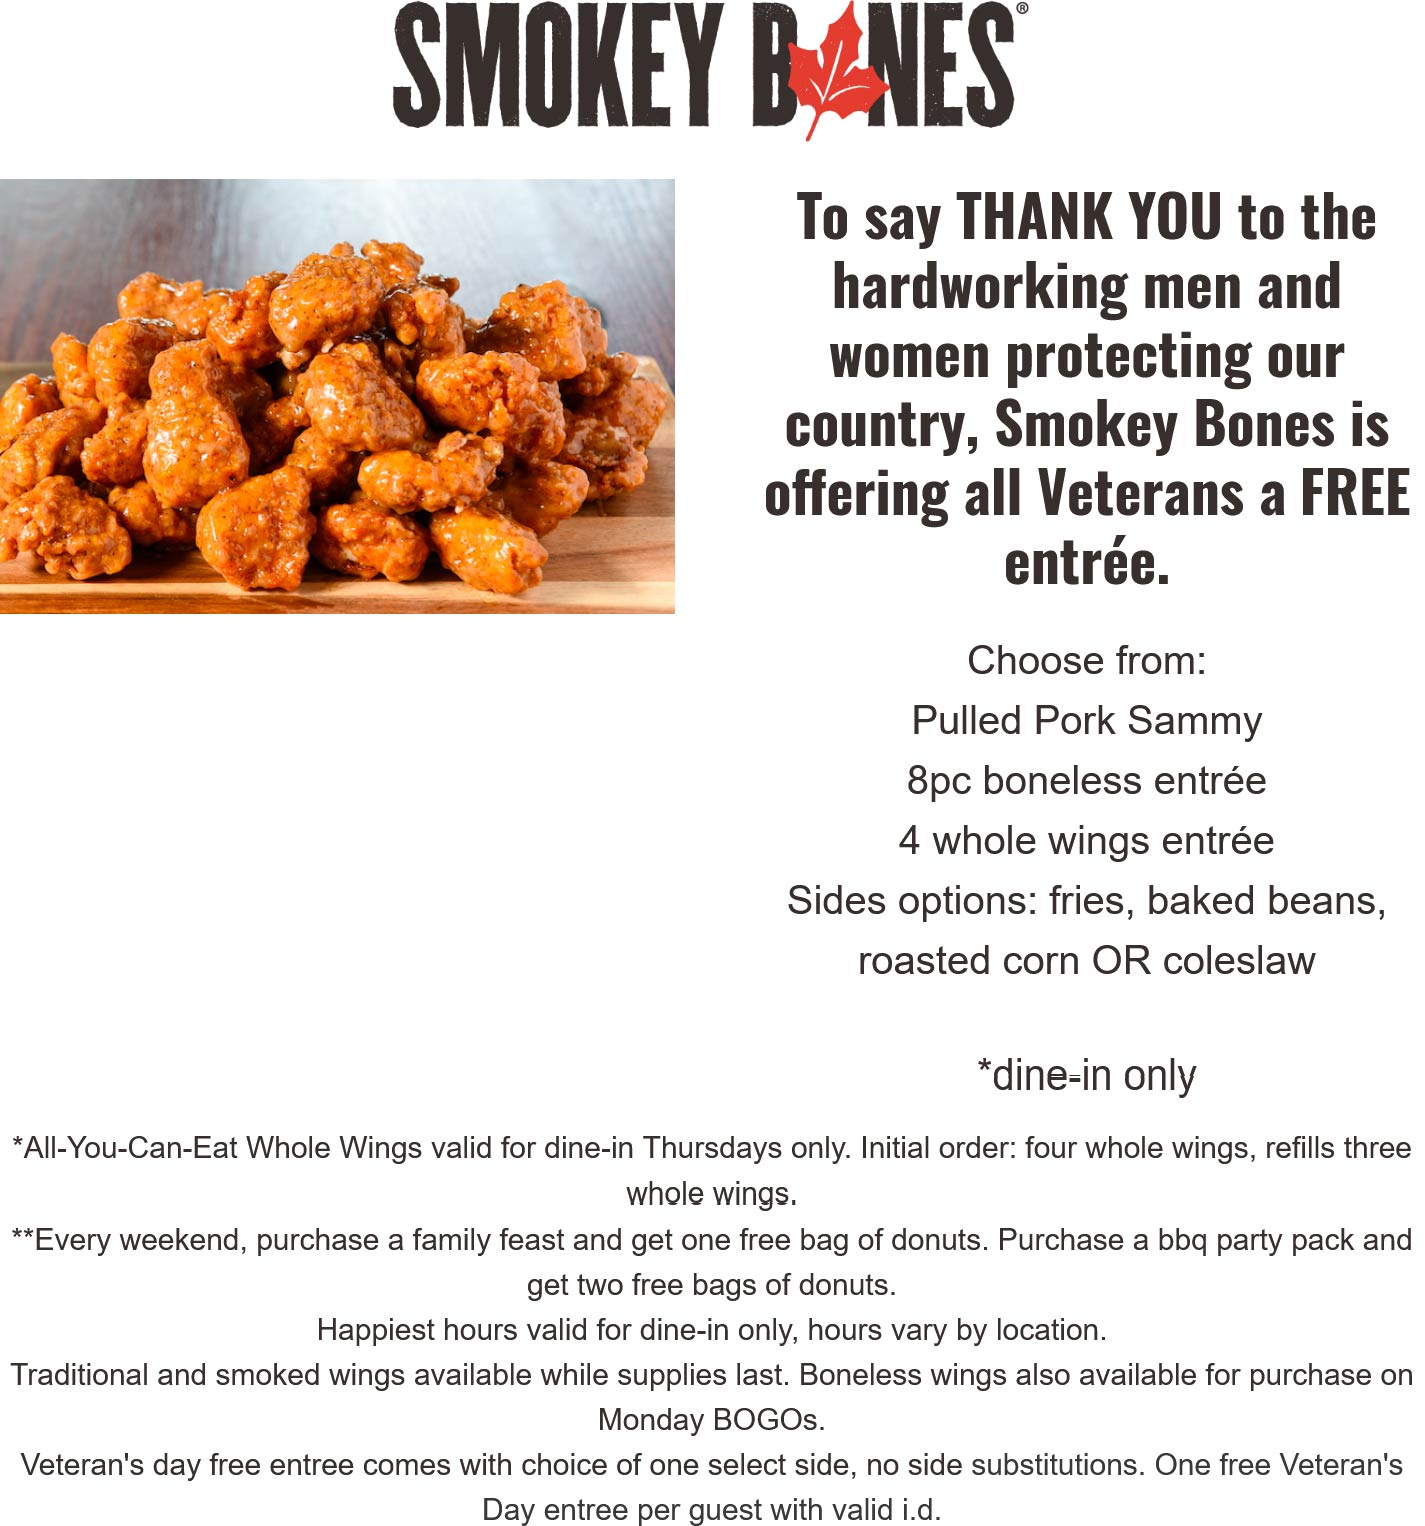 Smokey Bones restaurants Coupon  Veterans enjoy a free entree today at Smokey Bones #smokeybones 